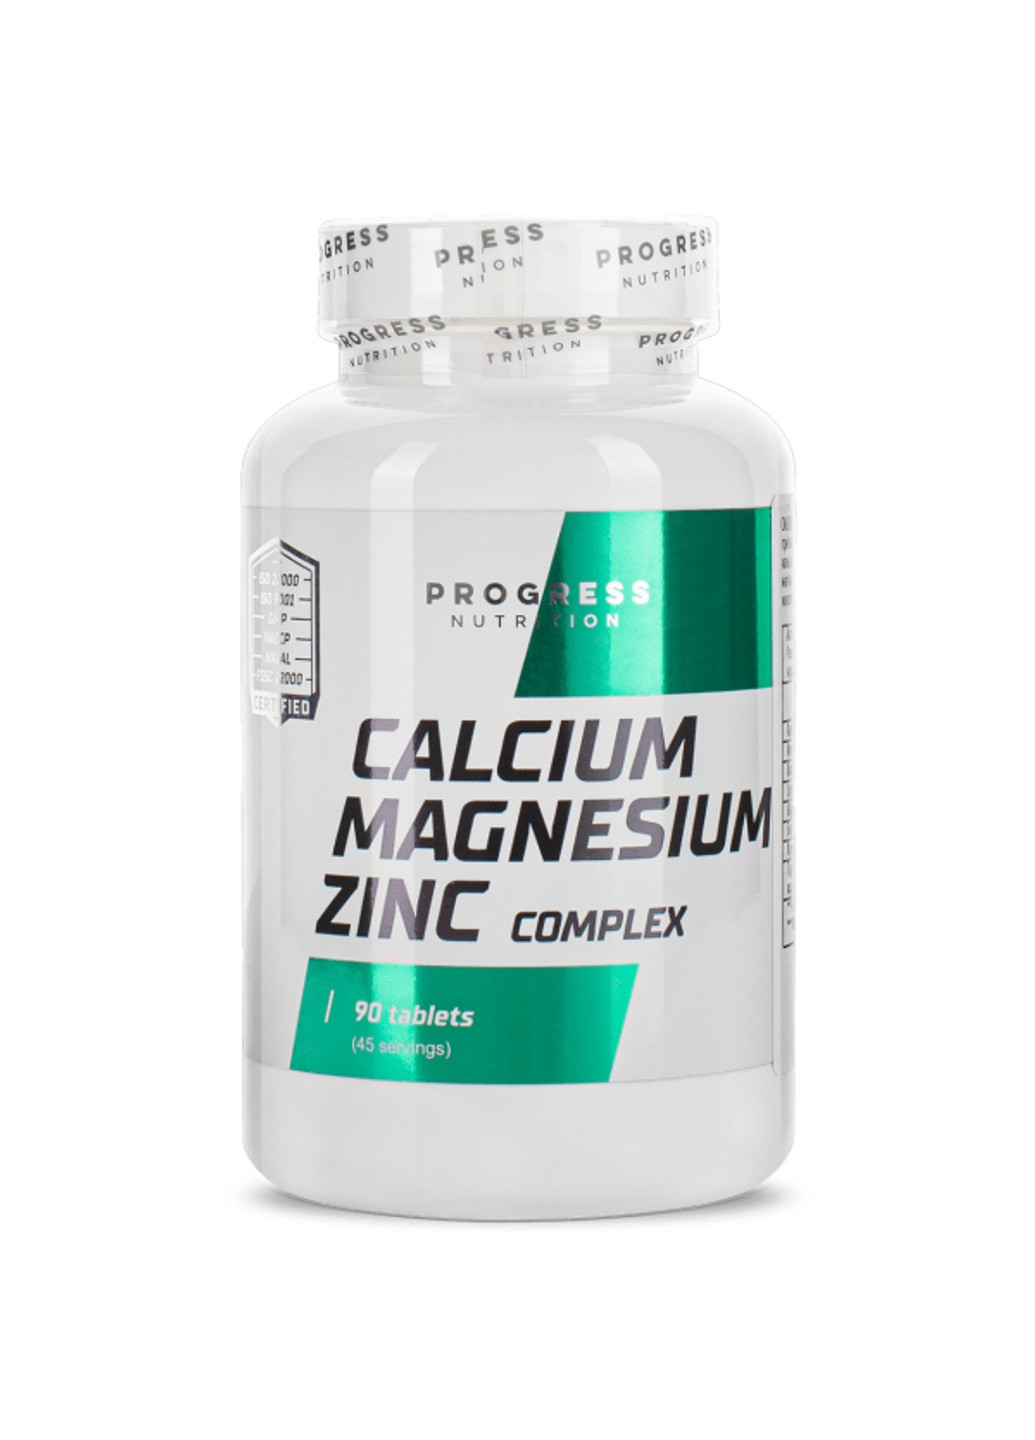 Кальцій магній цинк Calcium Magnesium Zinc 90 таблеток Progress Nutrition (255408405)